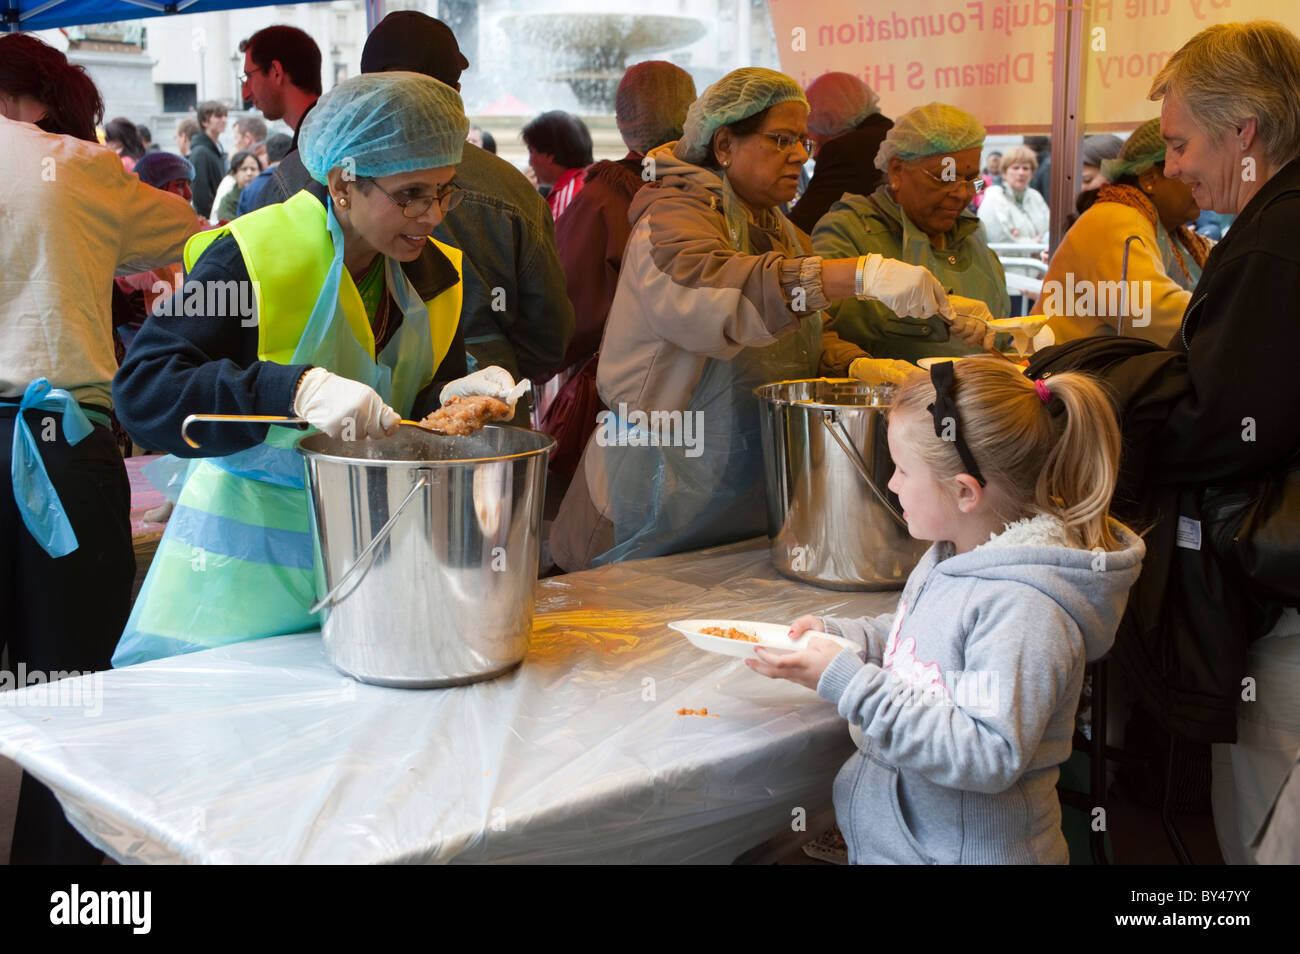 Child receiving free meal at celebration of  Ratha Yatra The Hindu Festival of Chariots,Trafalgar Square,London 2010 Stock Photo